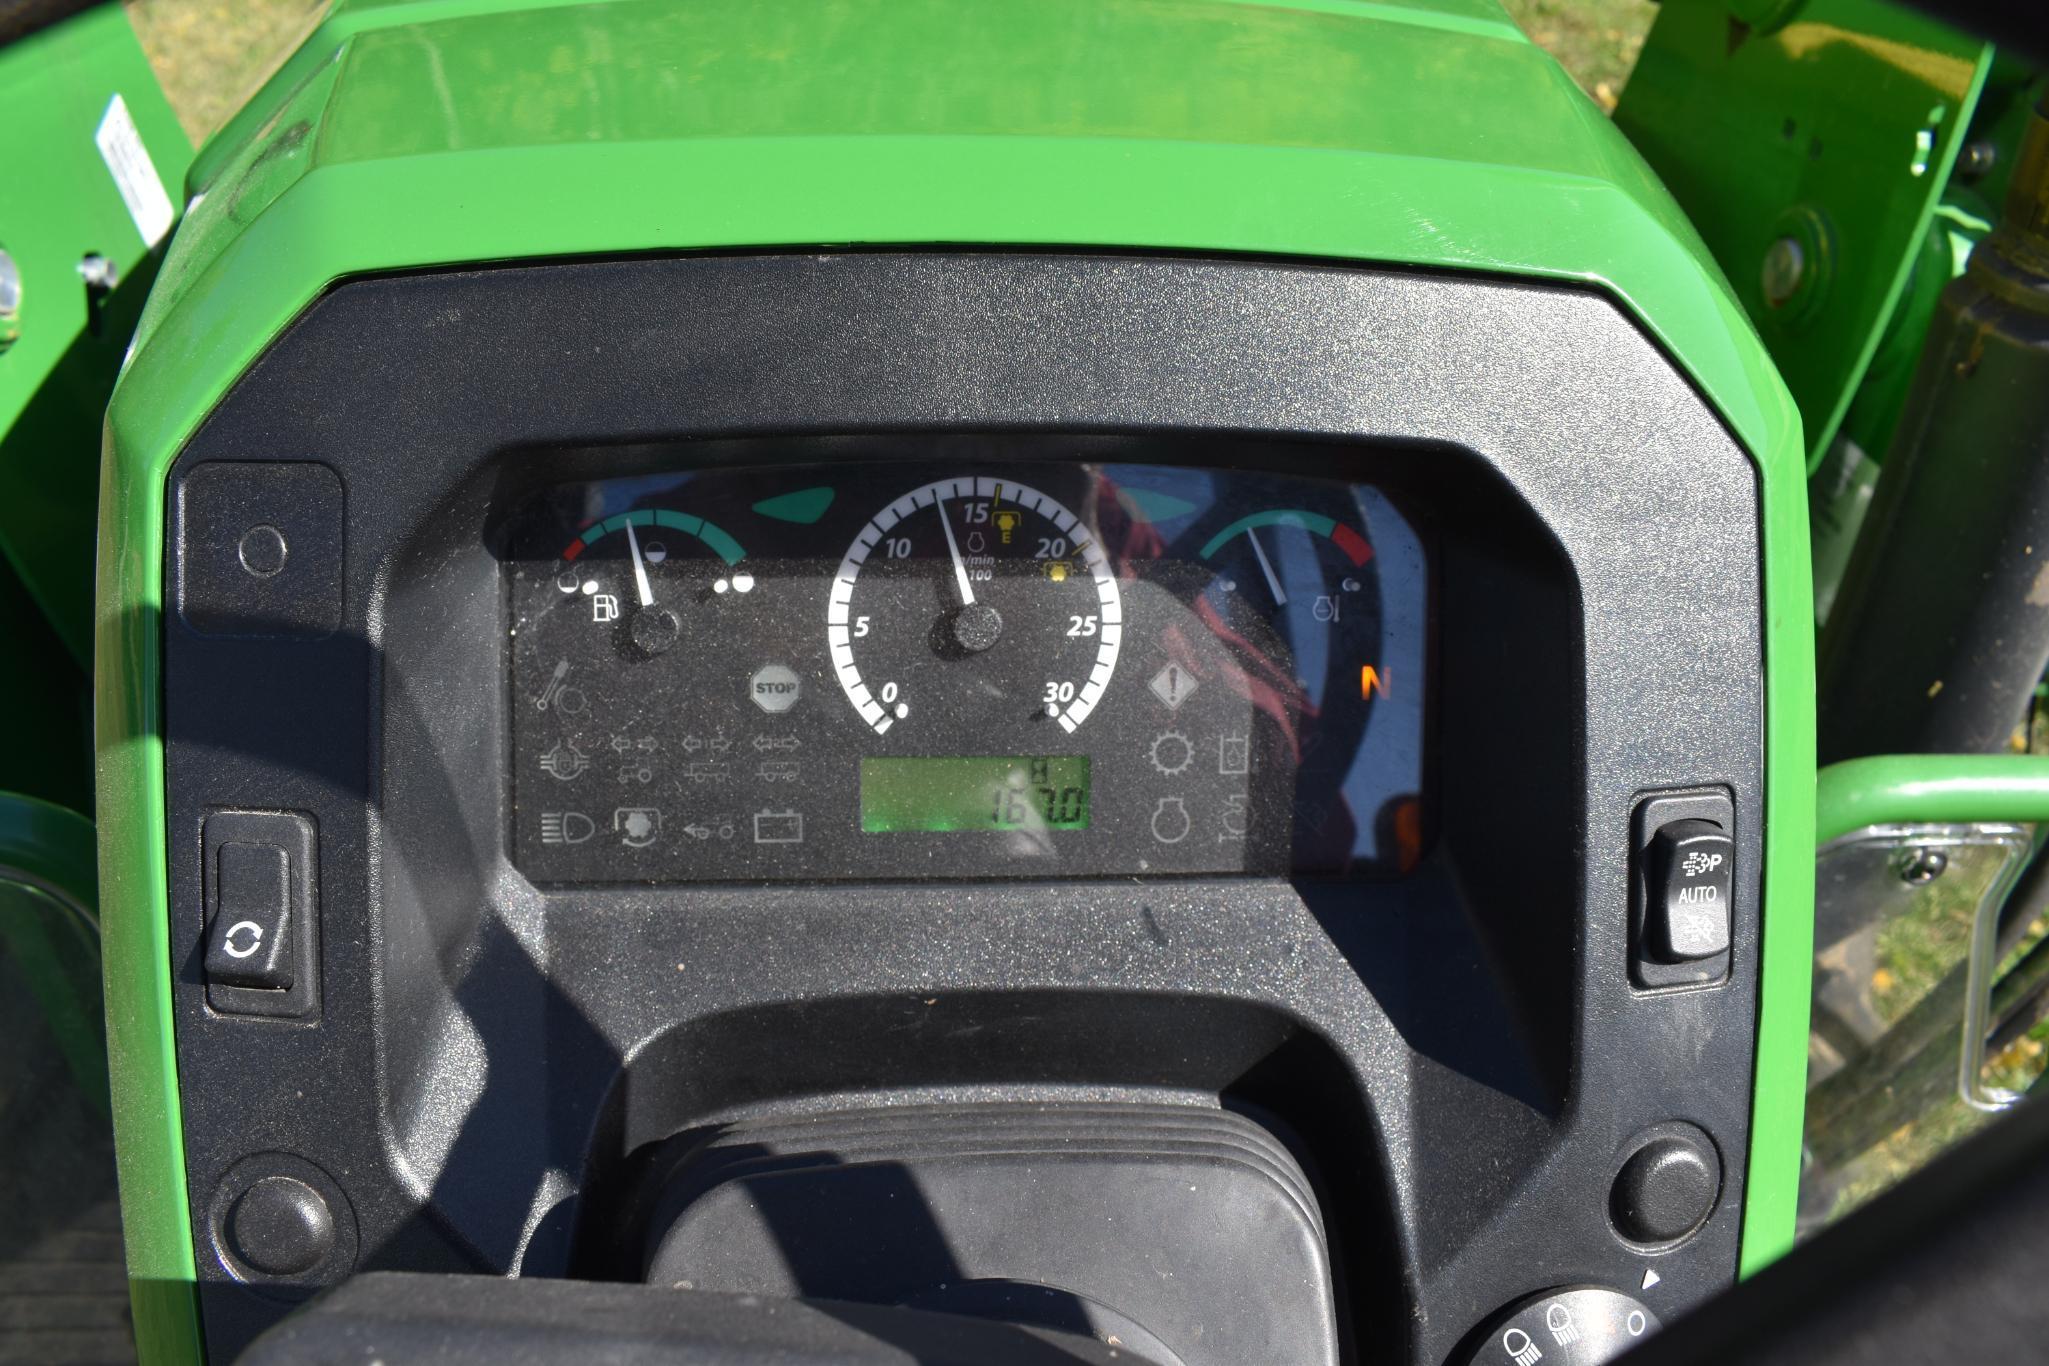 2018 John Deere 5055E MFWD tractor